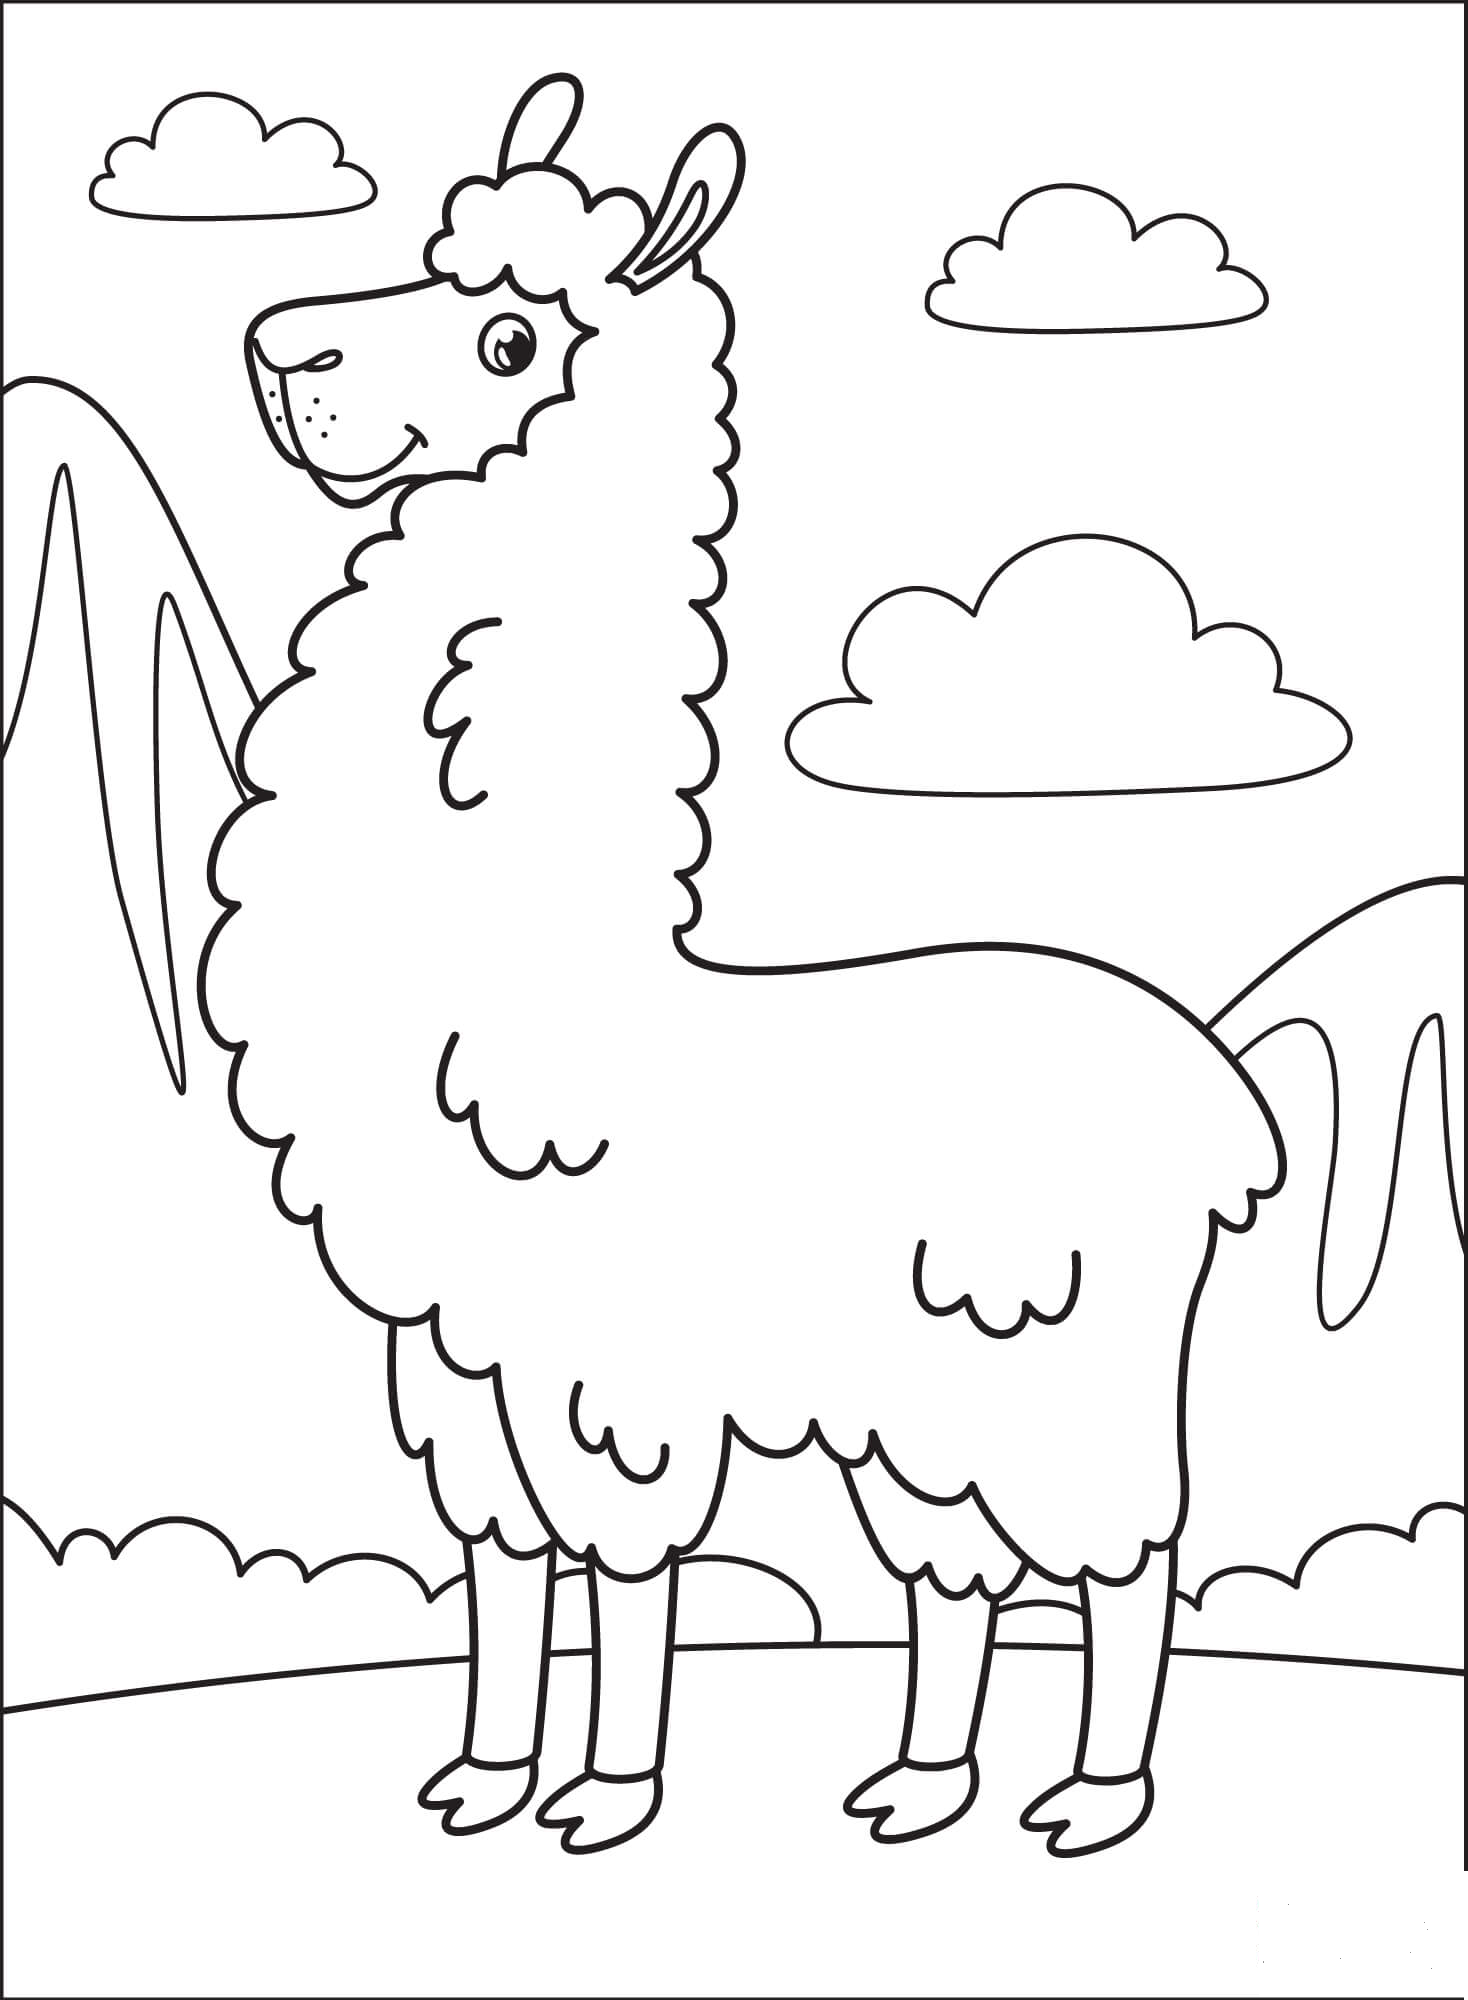 Llama coloring page - ColouringPages